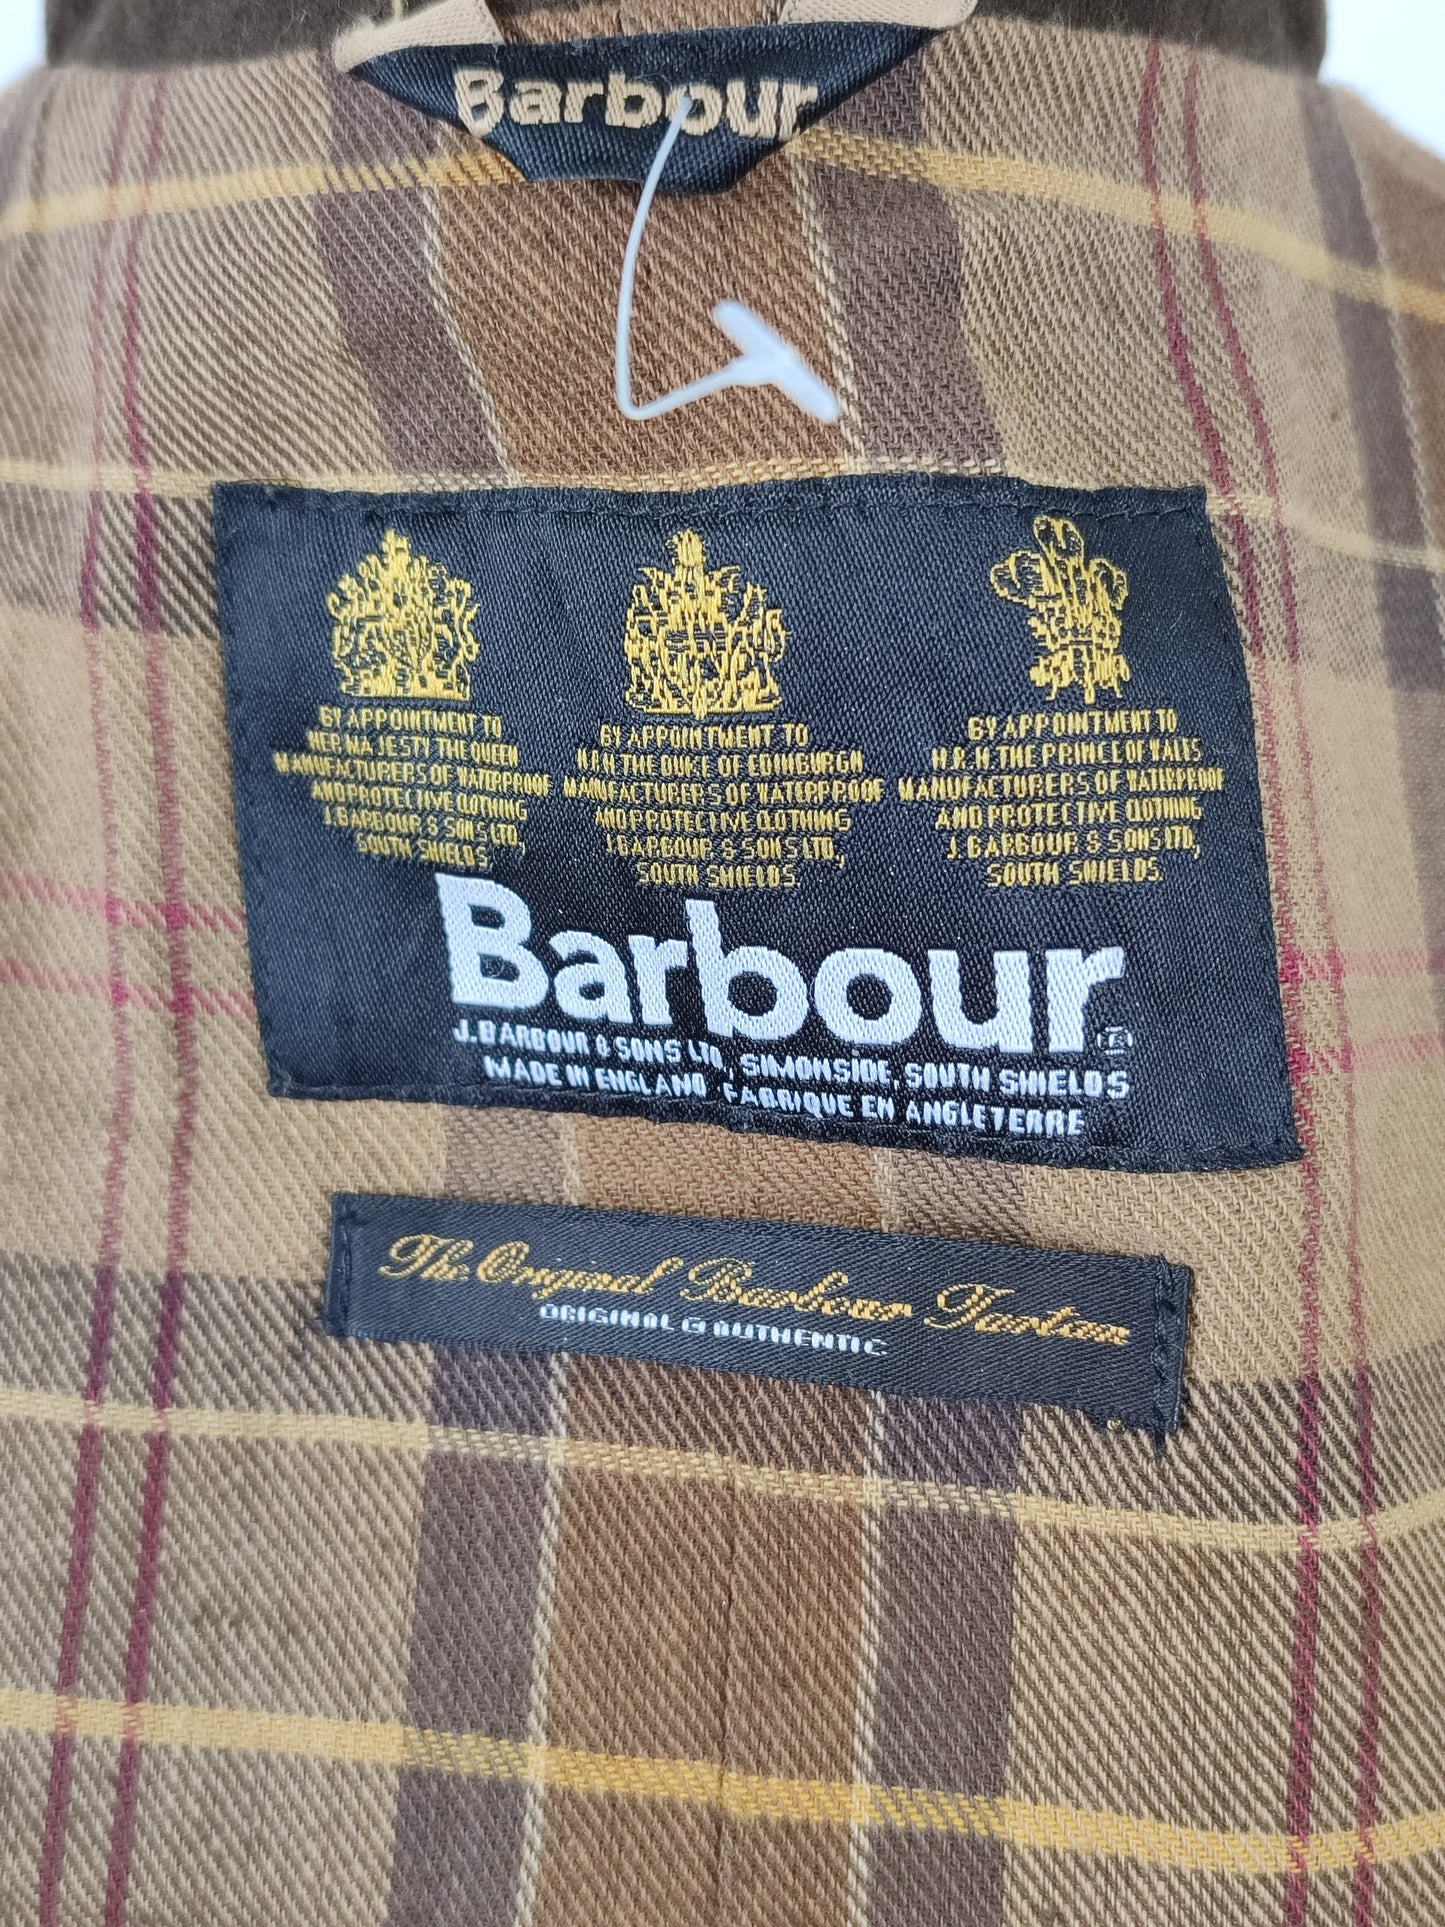 Barbour Giacca corta marrone donna Utility Medium 42 Lady Brown Utility wax Jacket uk12